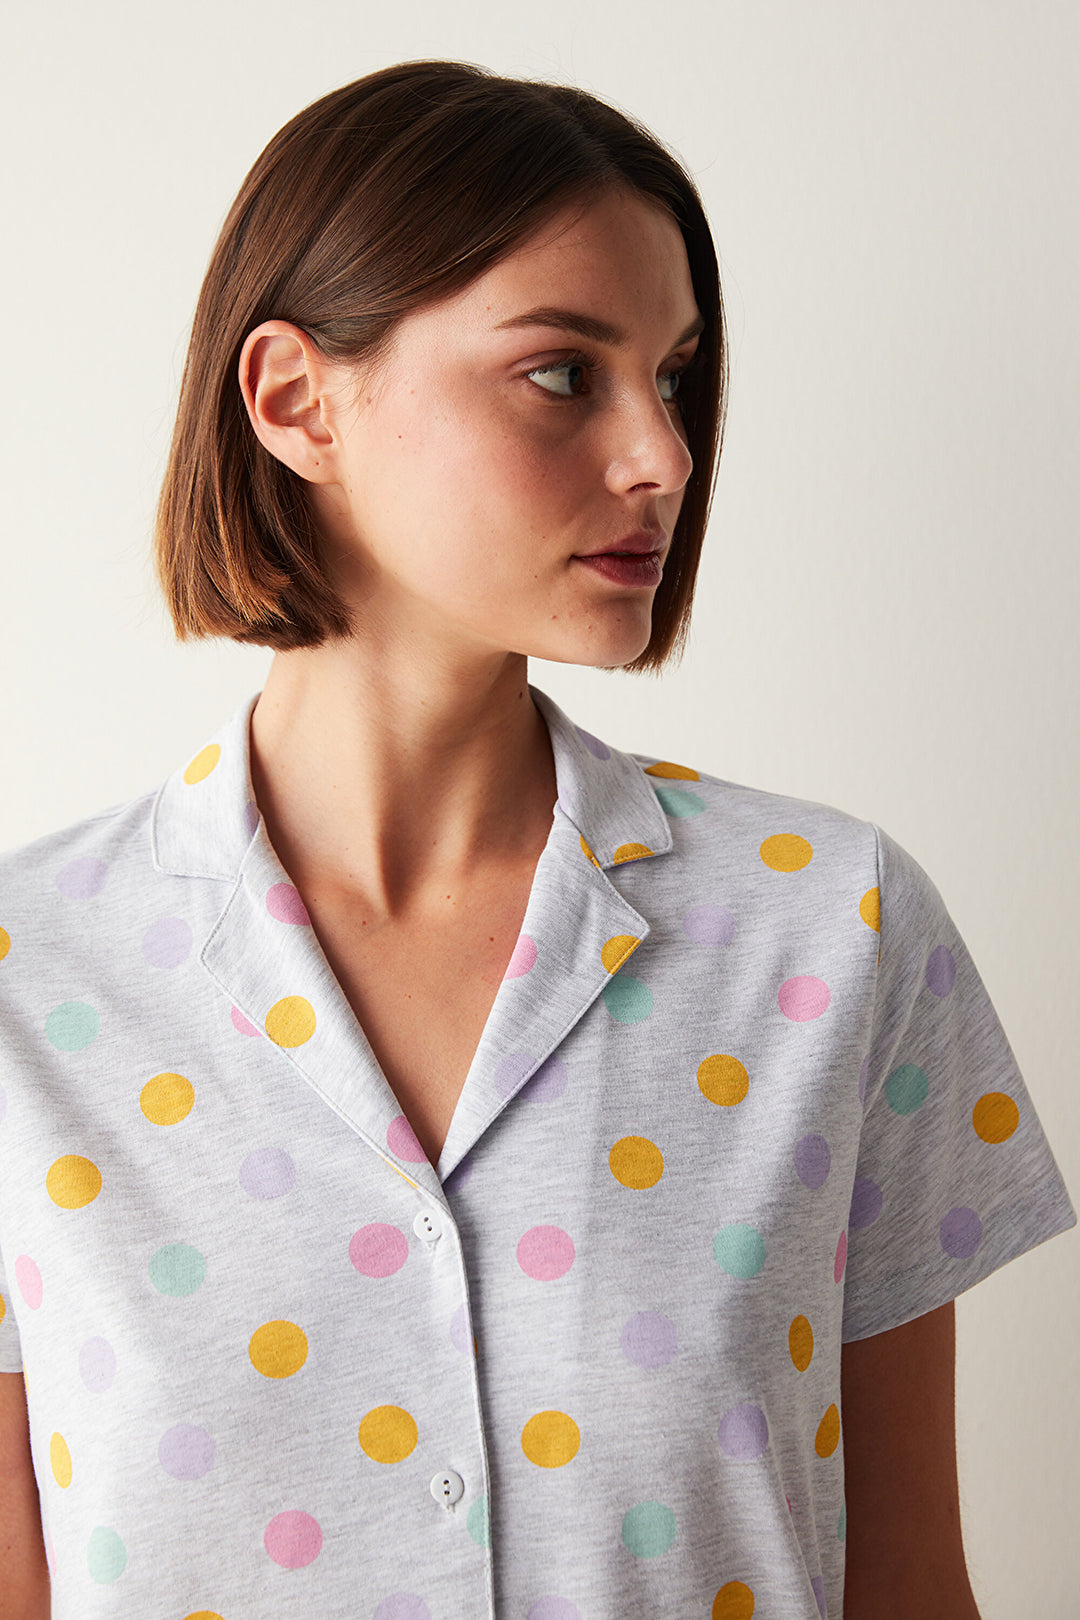 Colorful Dots Shirt Pants Gray Pajama Set